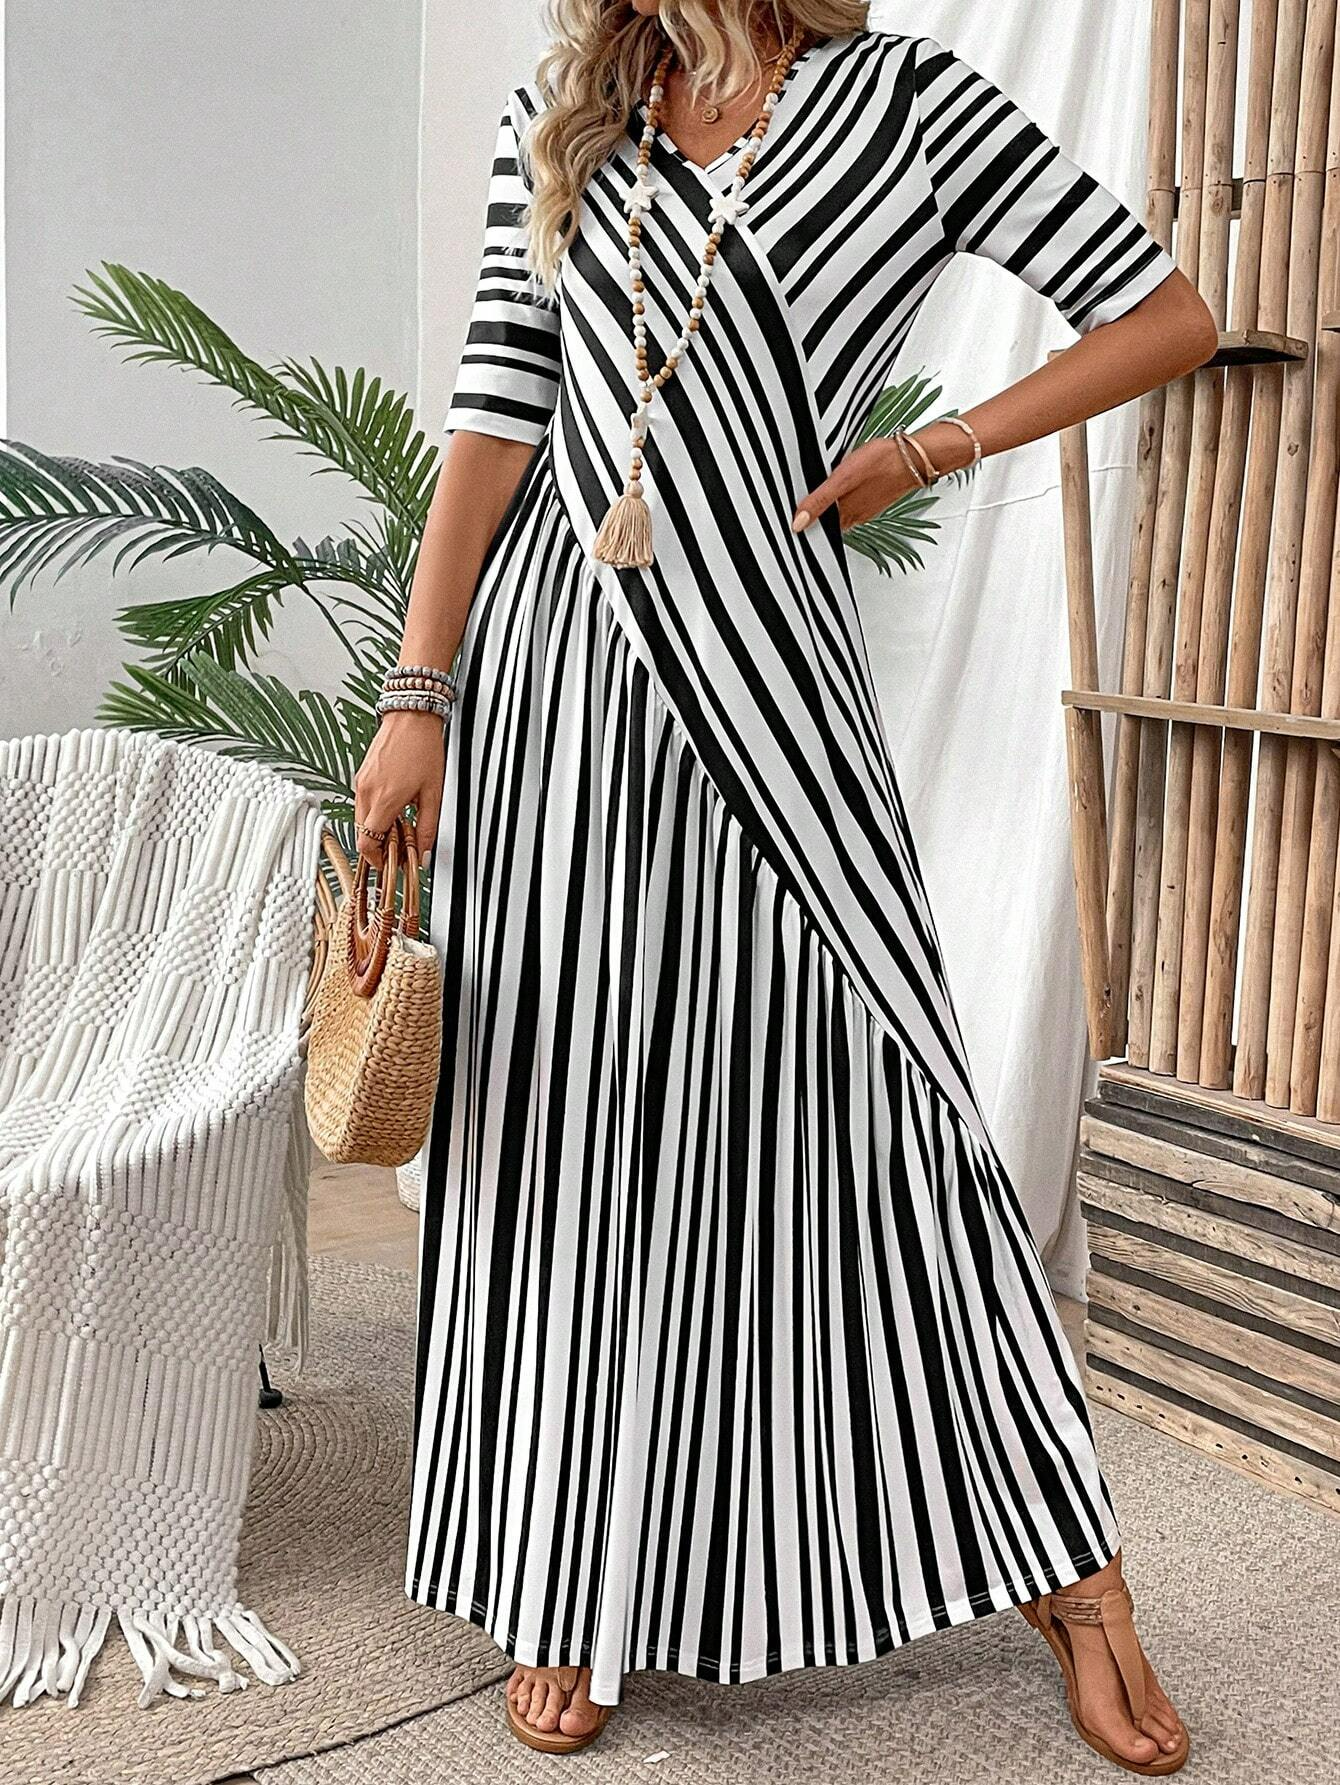 Women's Half Sleeve Summer Dress Black Striped Cross V Neck Going Out Casual Maxi A-Line Dress